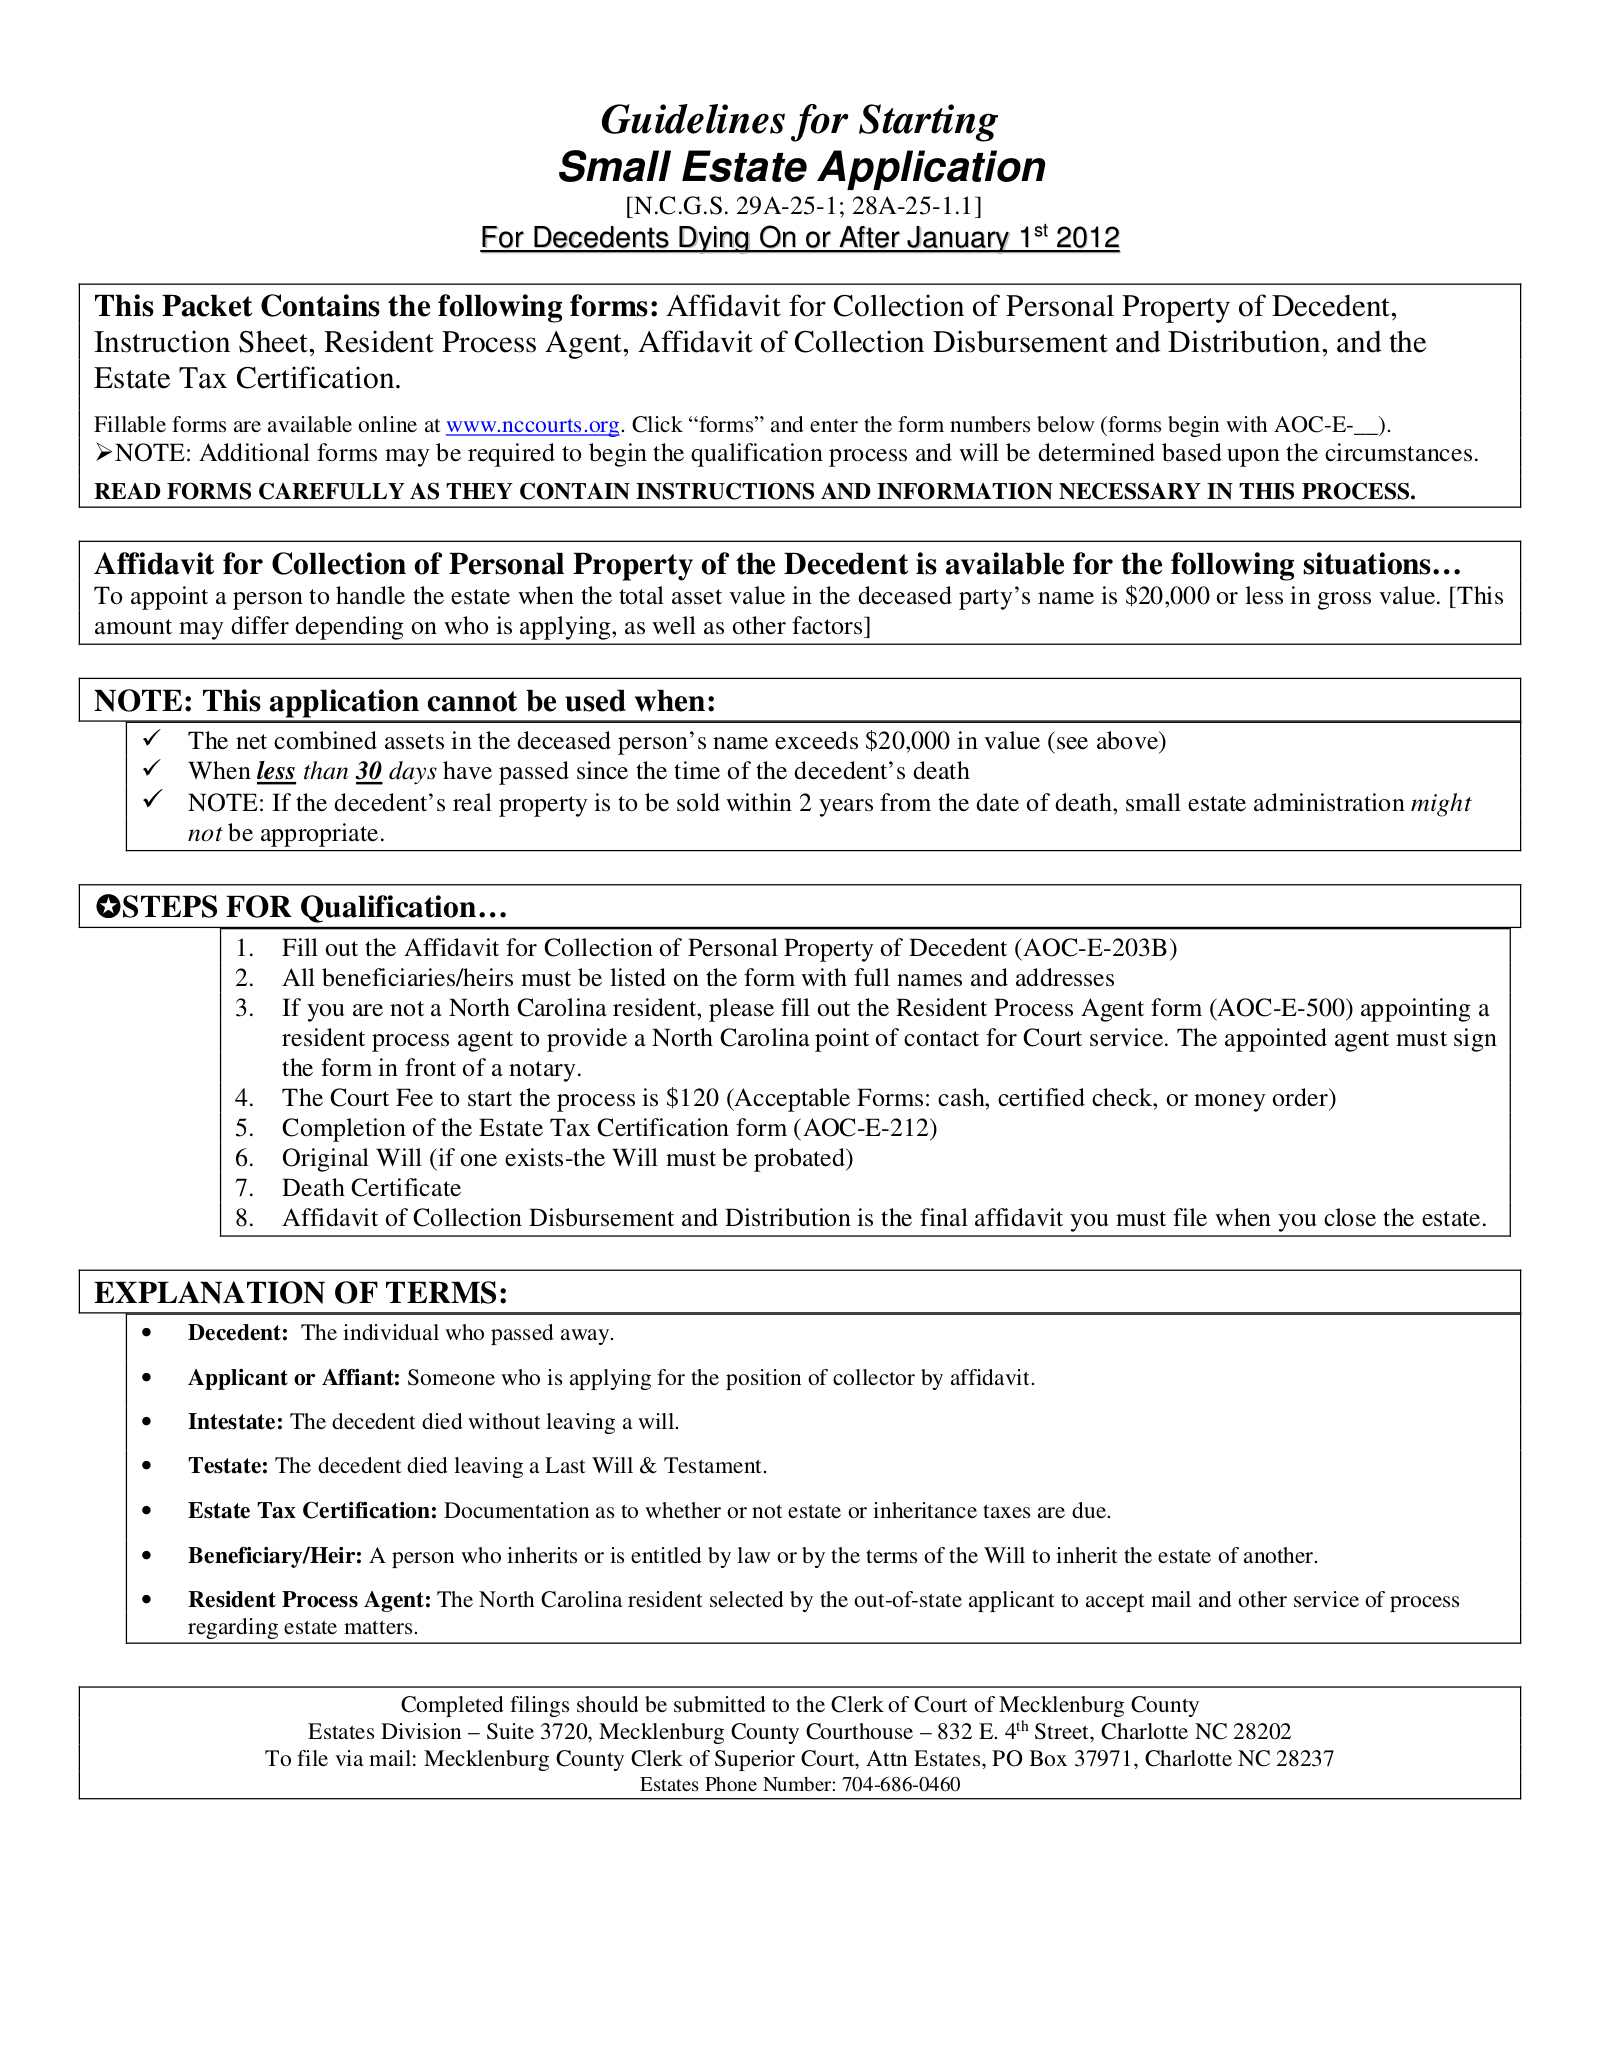 North Carolina Small Estate Affidavit | Form AOC-E-203B